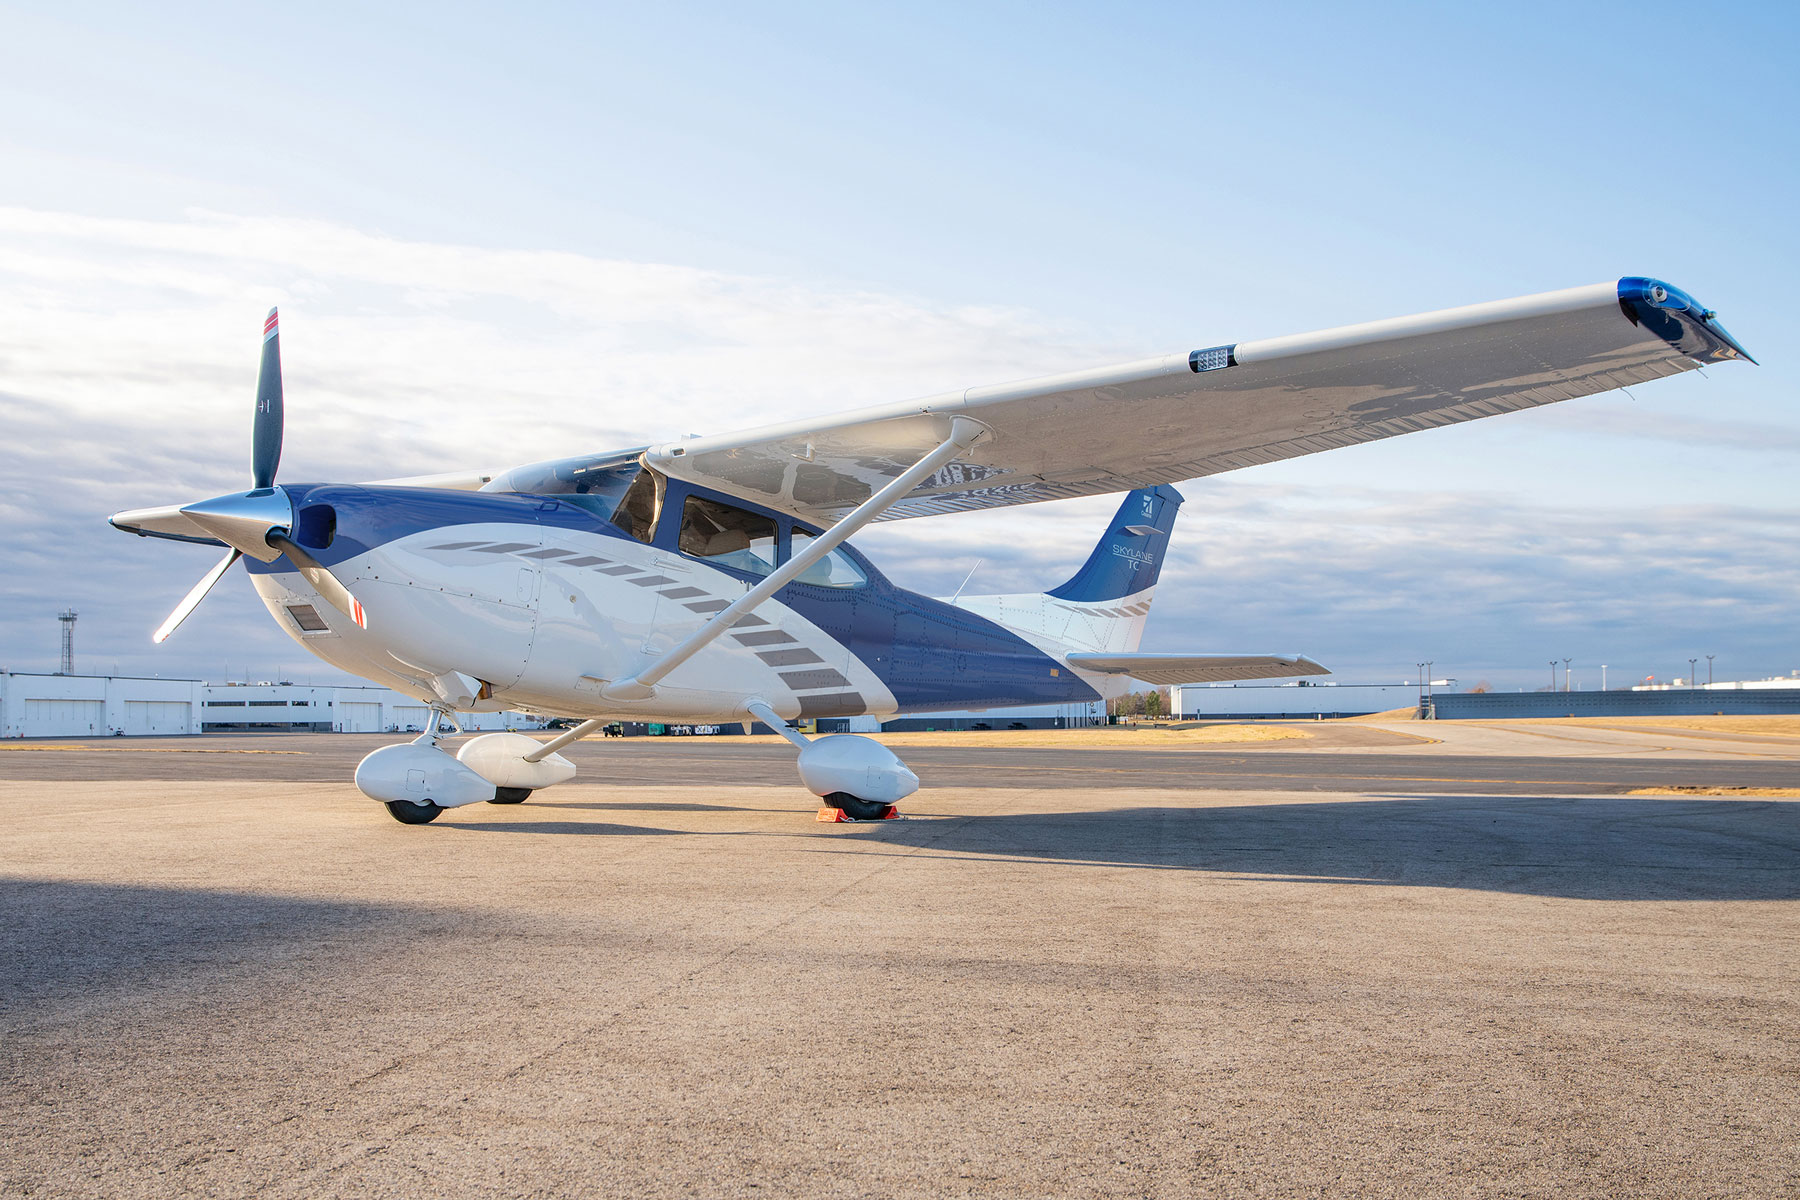 Cessna Turbo Skylane returns to Textron Aviation’s renowned piston product lineup